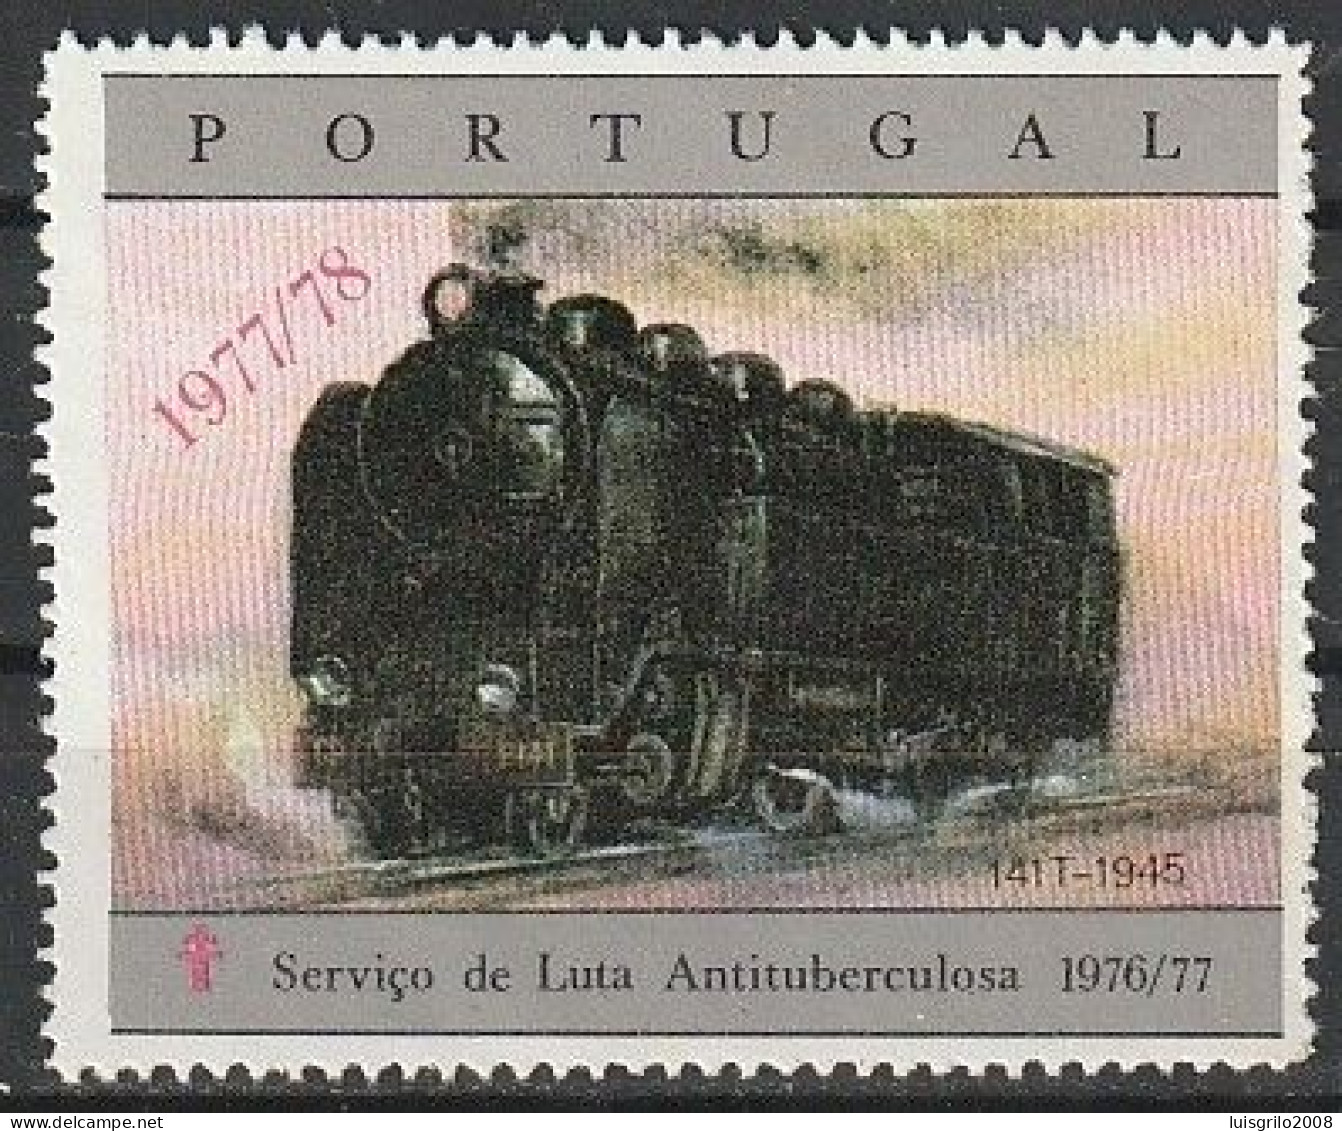 Portugal, Vignettes/ Vinhetas Tuberculosos - Comboios/ Trains > Luta Antituberculosa -|- MNH - Surcharge 1977/ 78 - Emissions Locales